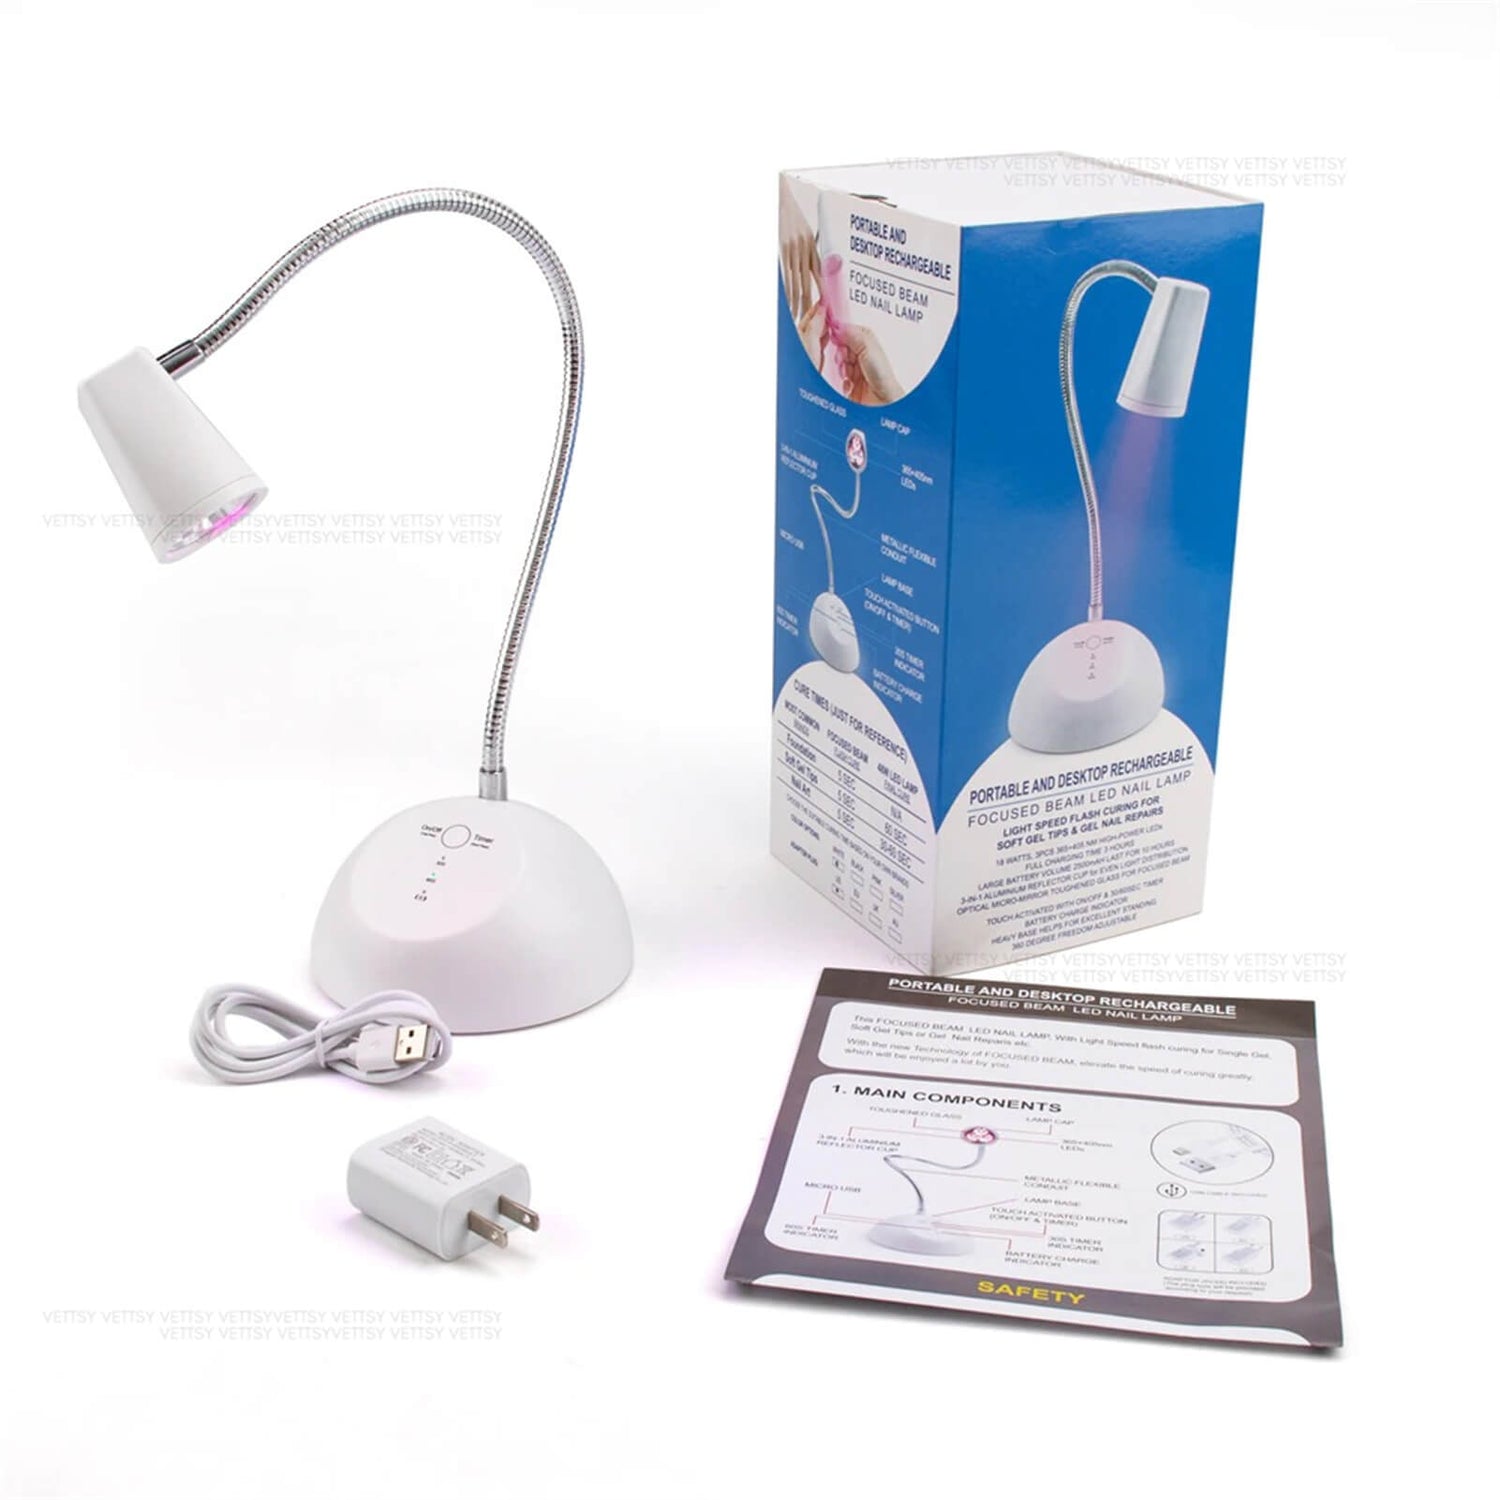 PRO Flashy Lamp ! ( 3W Handheld UV Light for Nails Cordless Nail